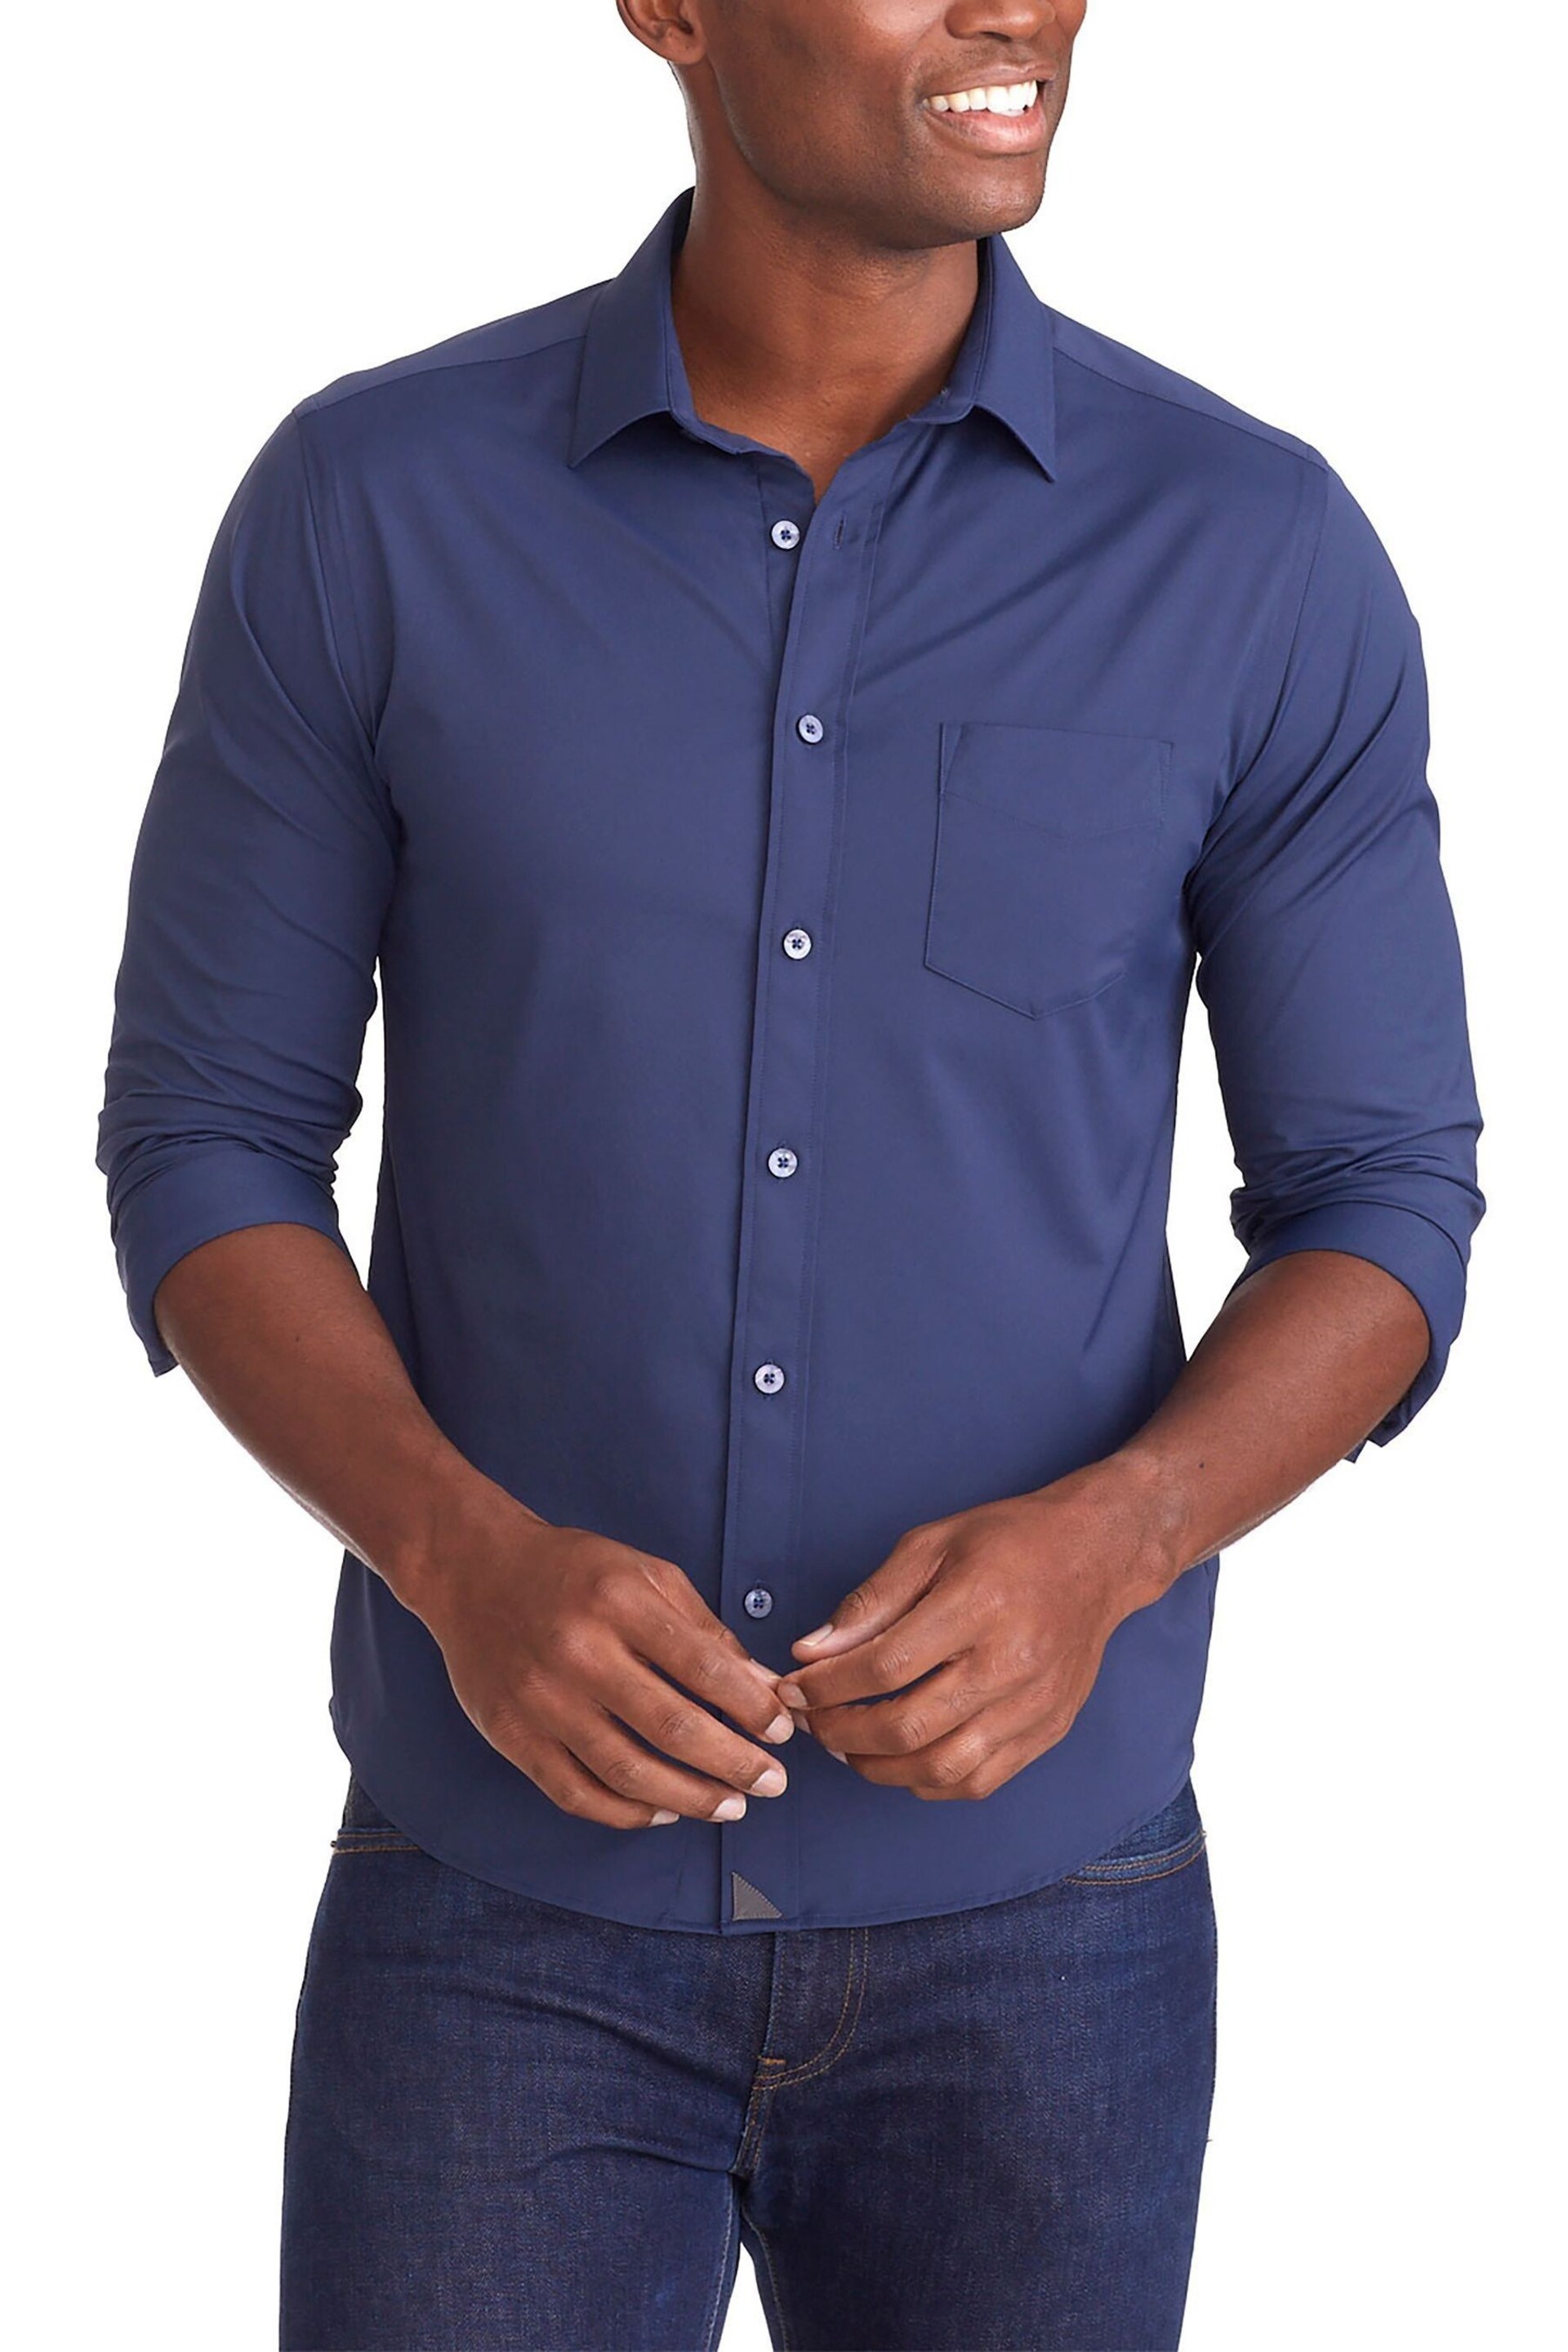 UNTUCKit Navy Blue Wrinkle-Free Performance Slim Fit Gironde Shirt - Image 1 of 3